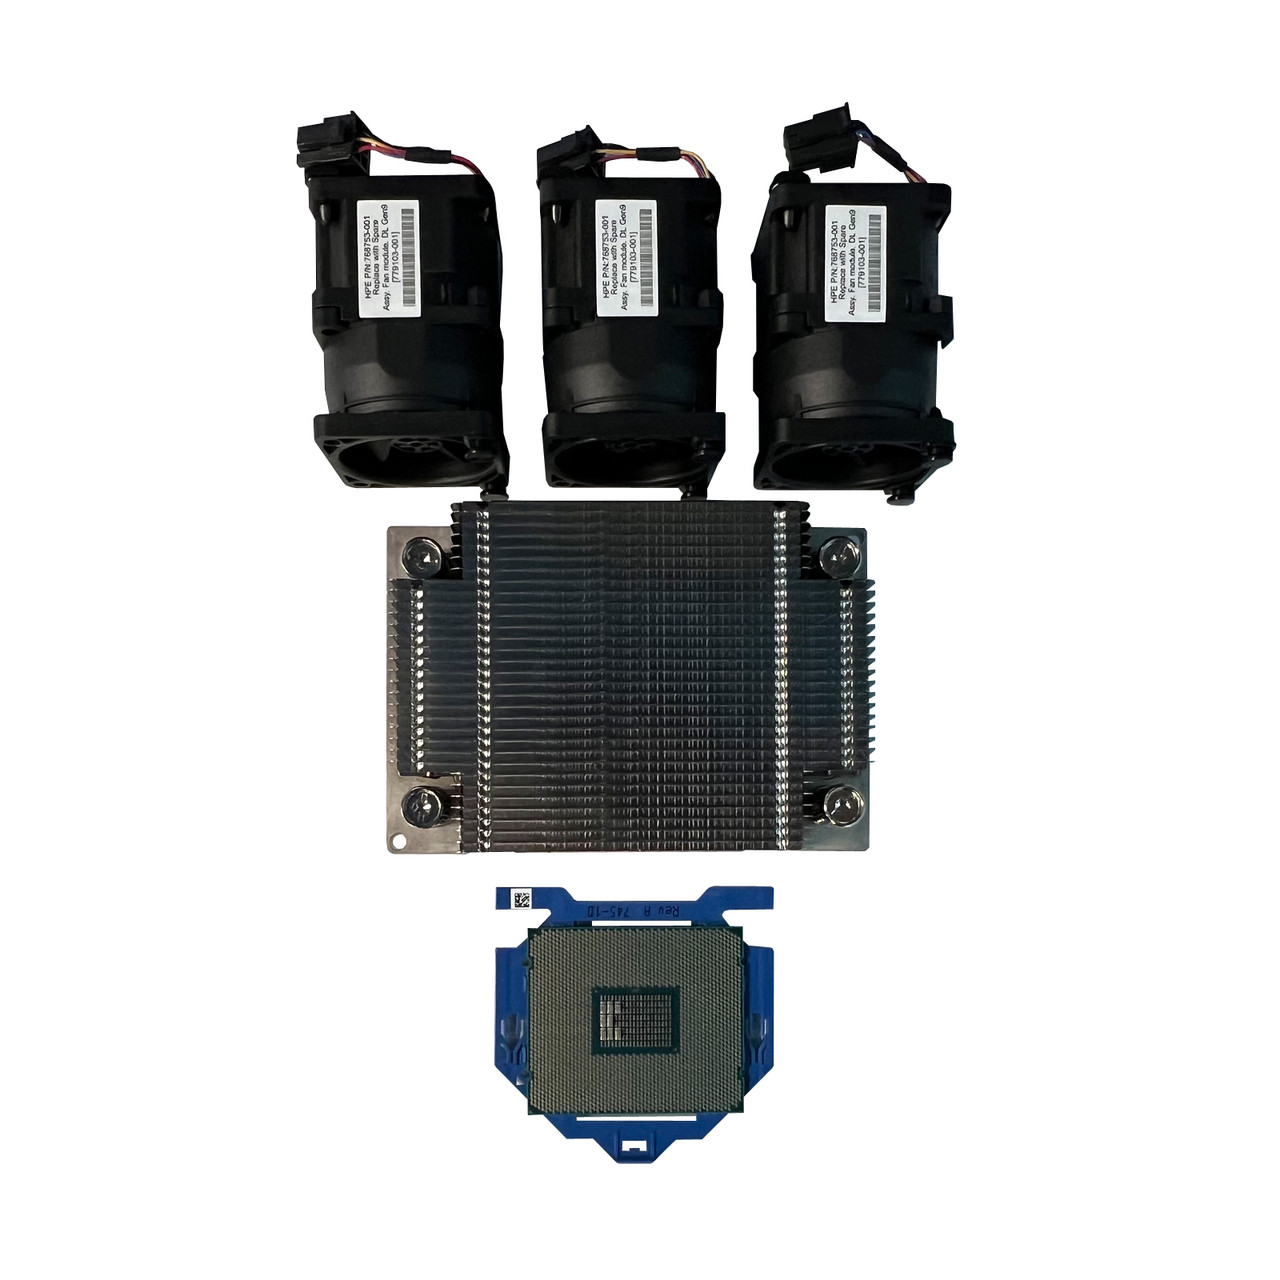 HPE 801291-B21 DL160 Gen9 Xeon E5-2630L V4 10C 1.8Ghz Processor Kit